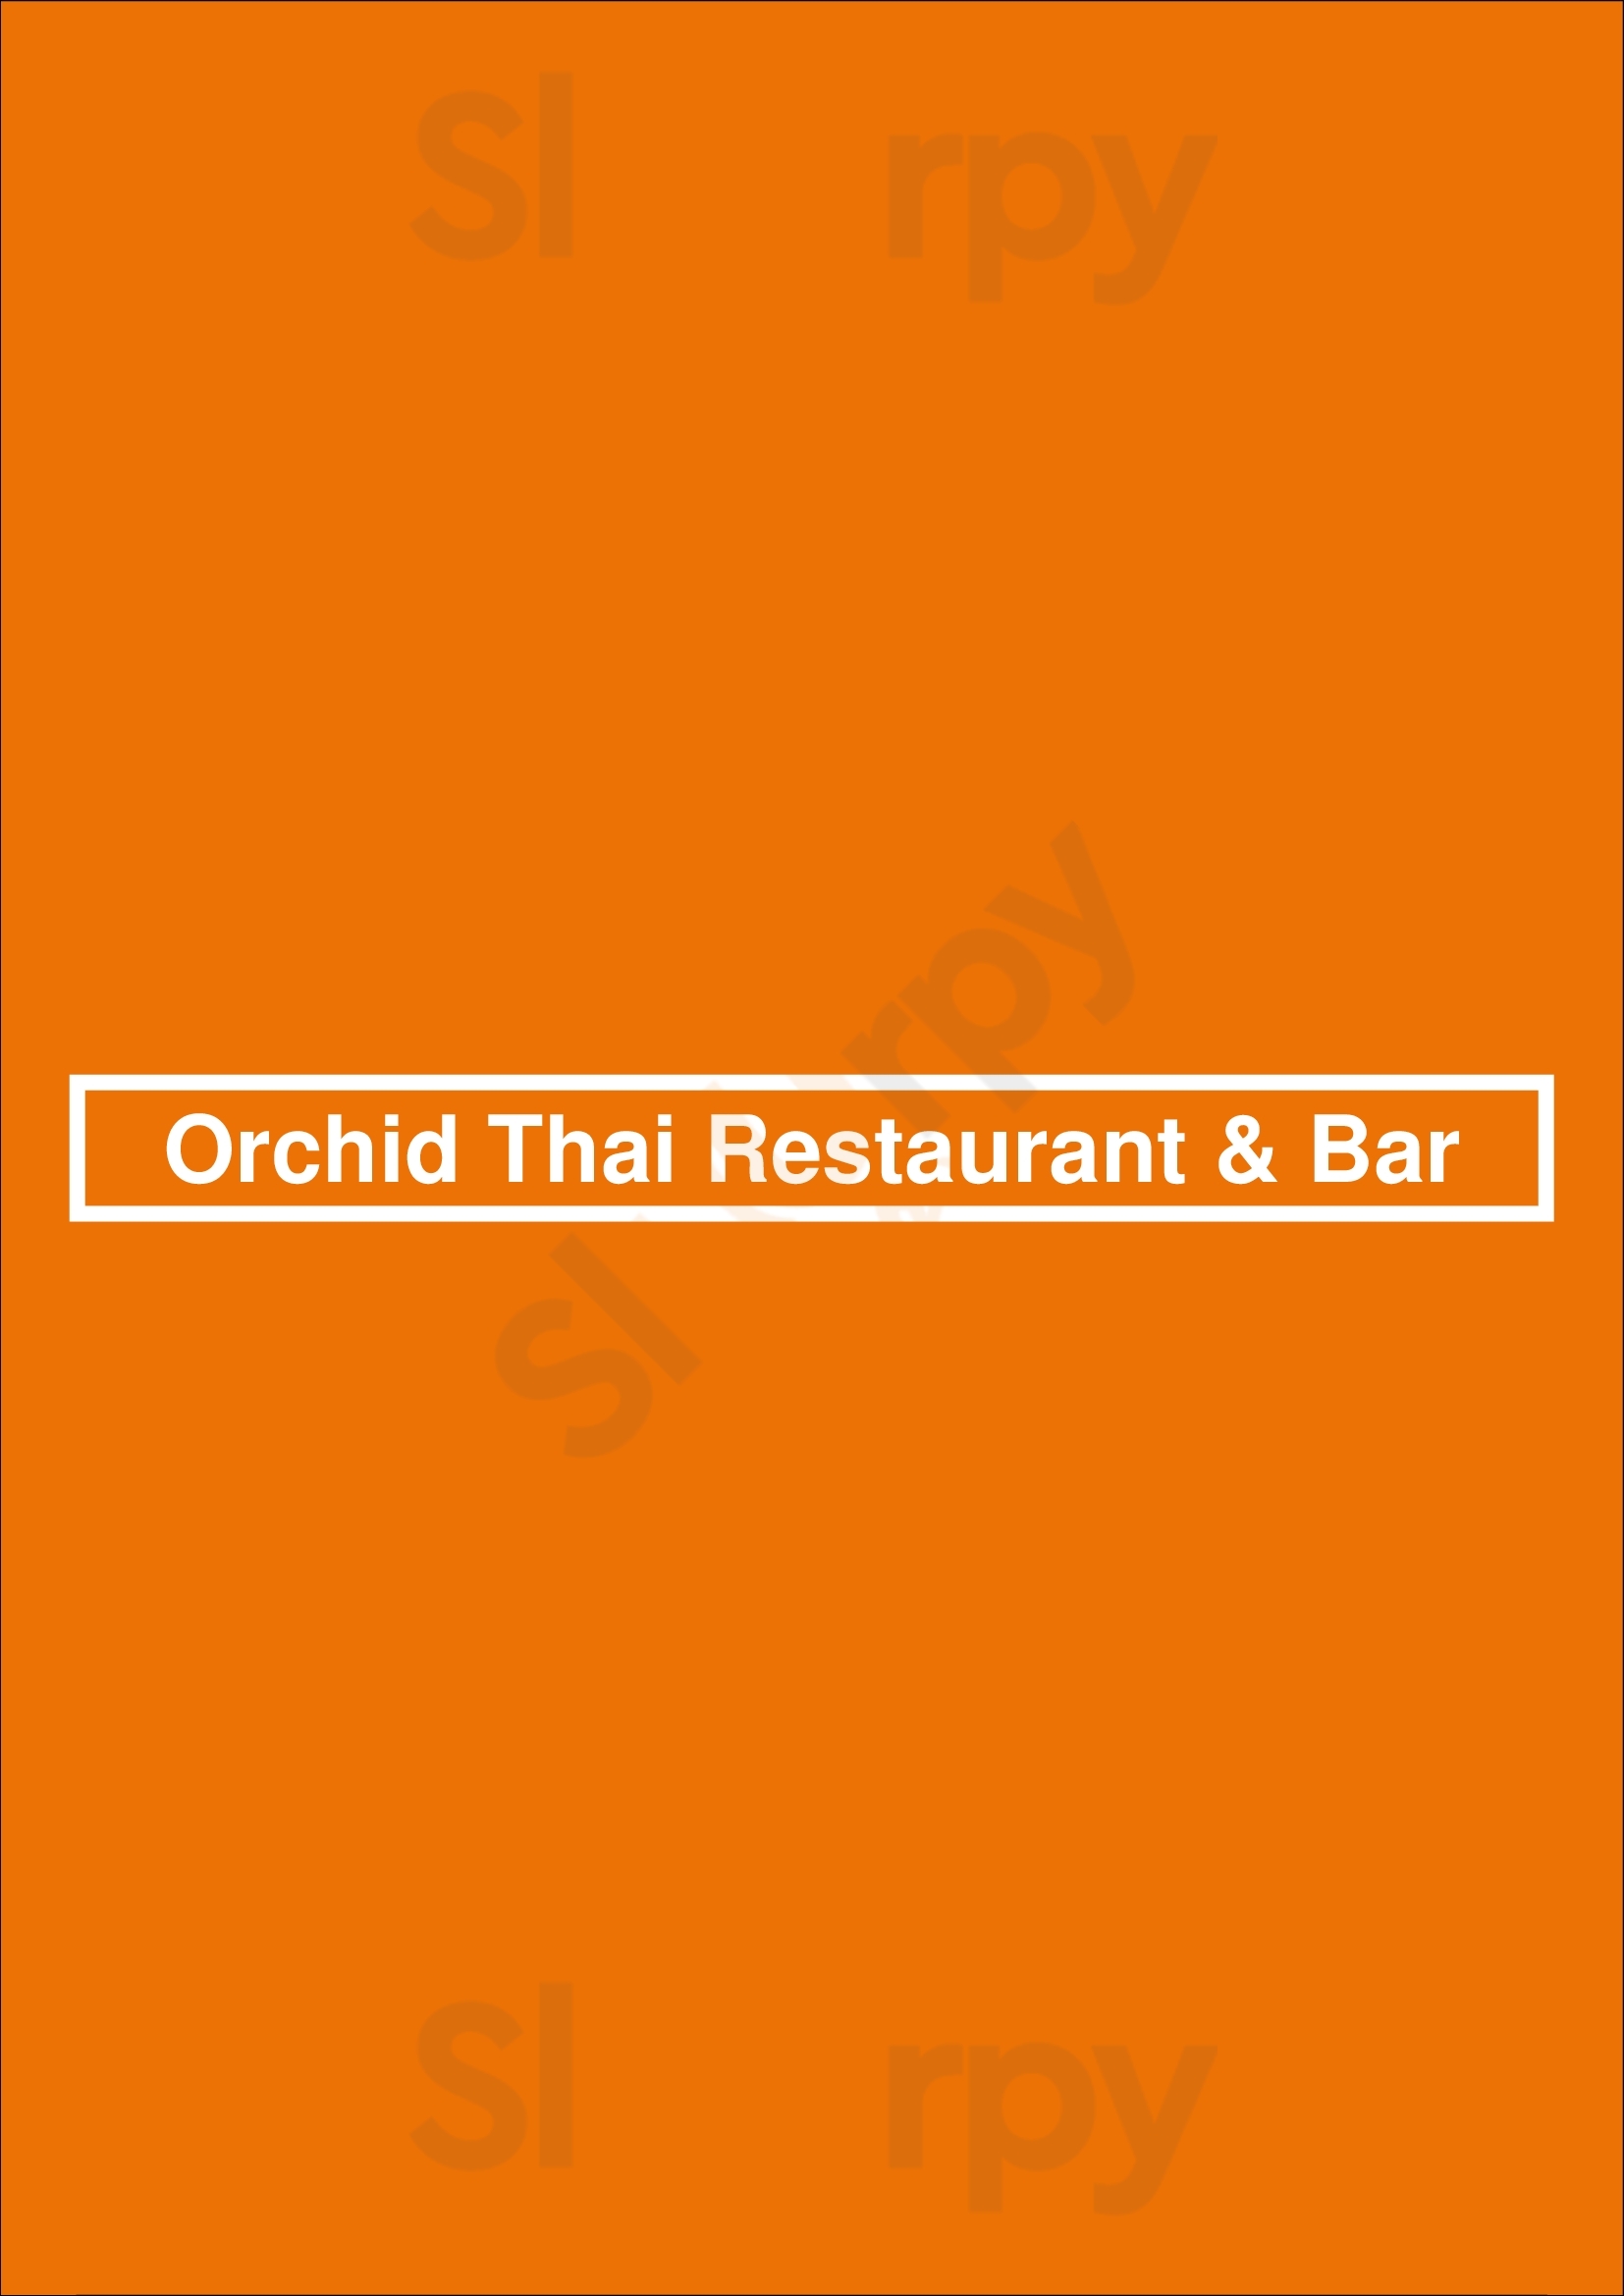 Orchid Thai Restaurant & Bar Sacramento Menu - 1